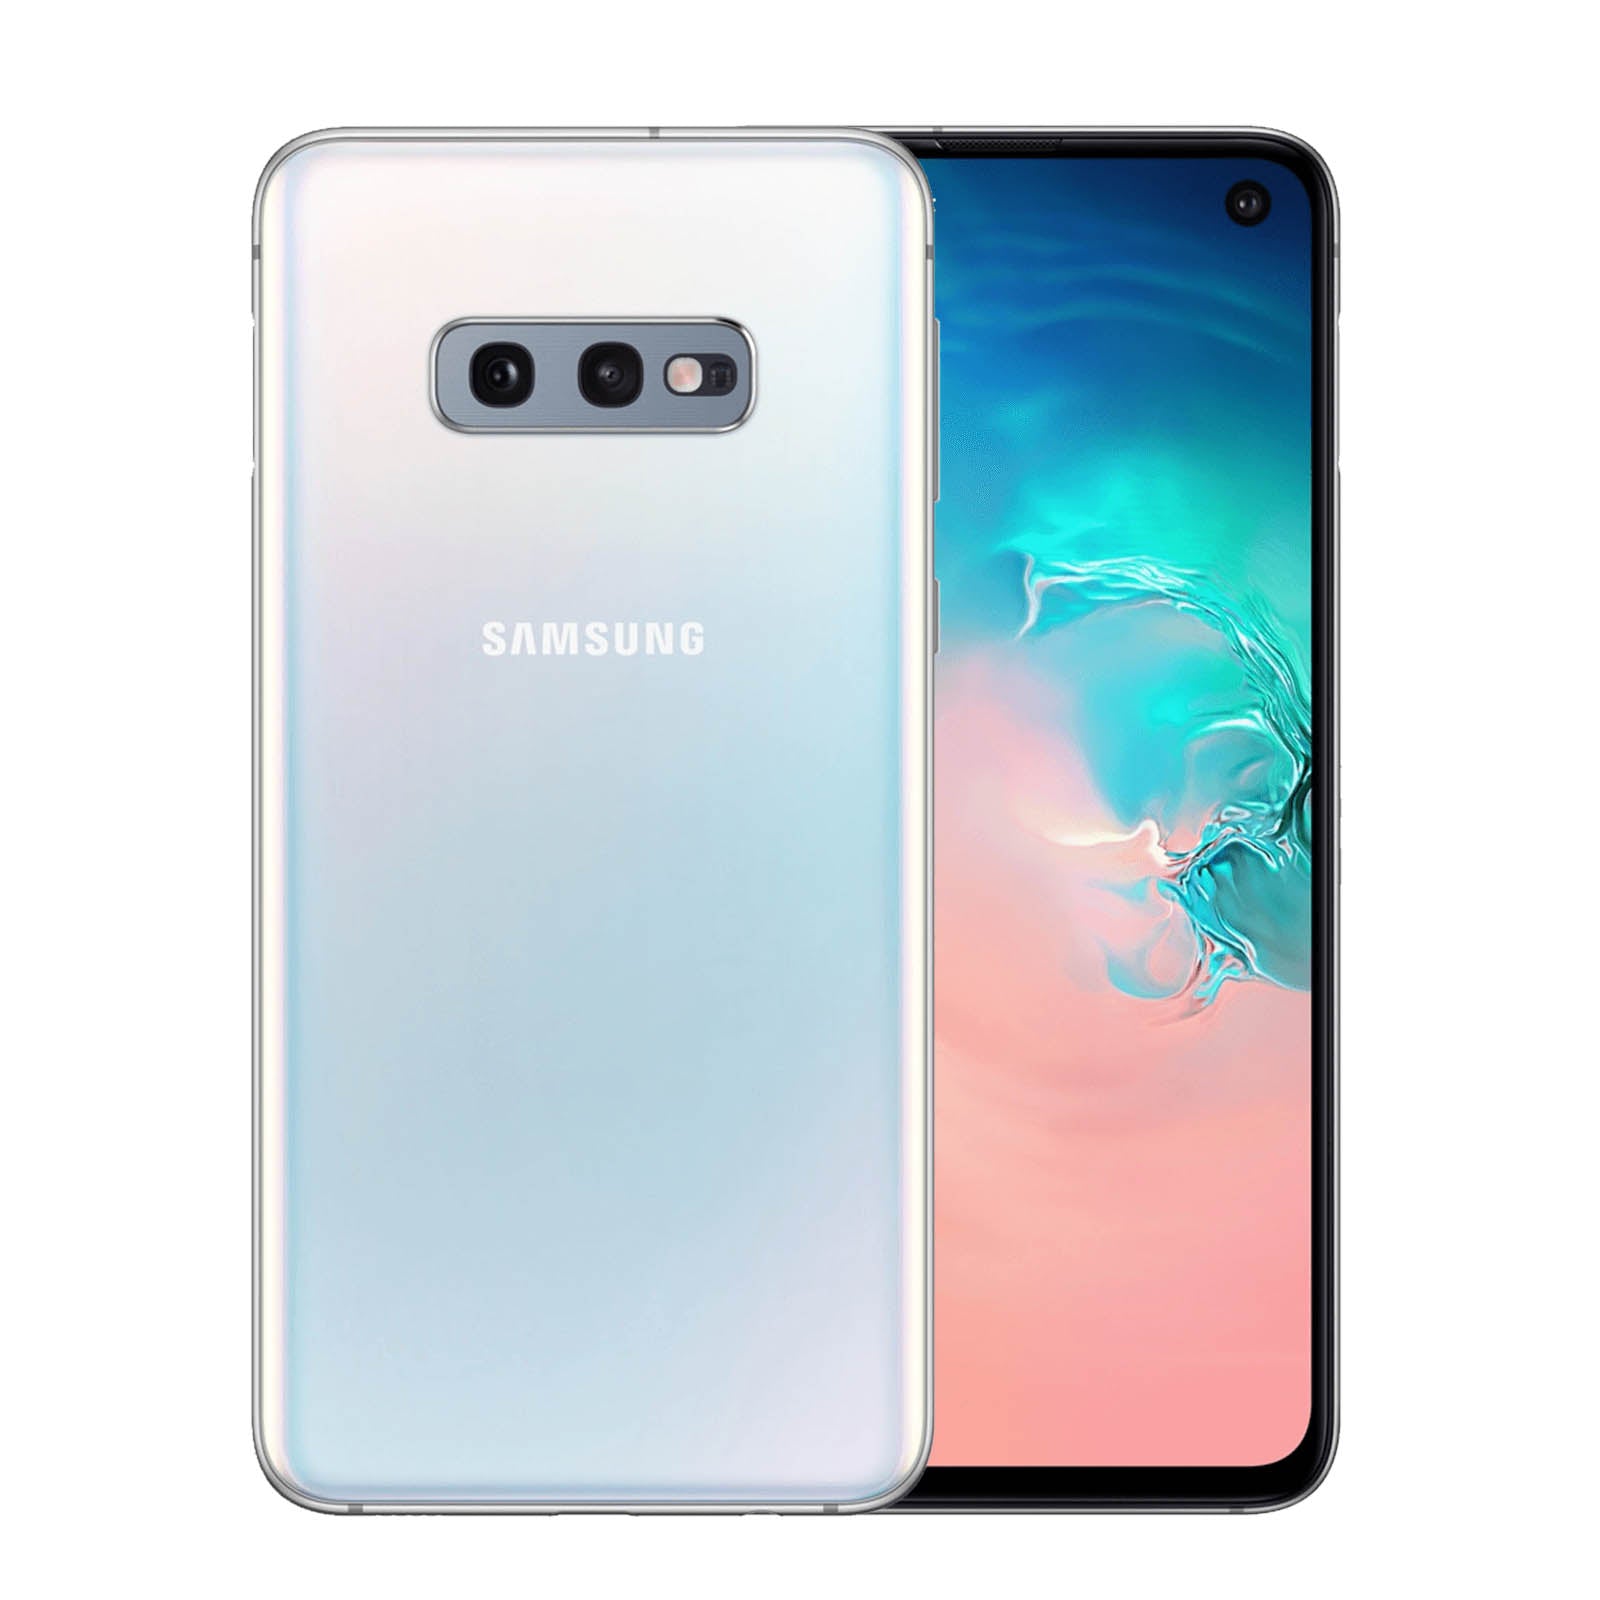 Samsung Galaxy S10E 128GB Prism White Very good - Unlocked